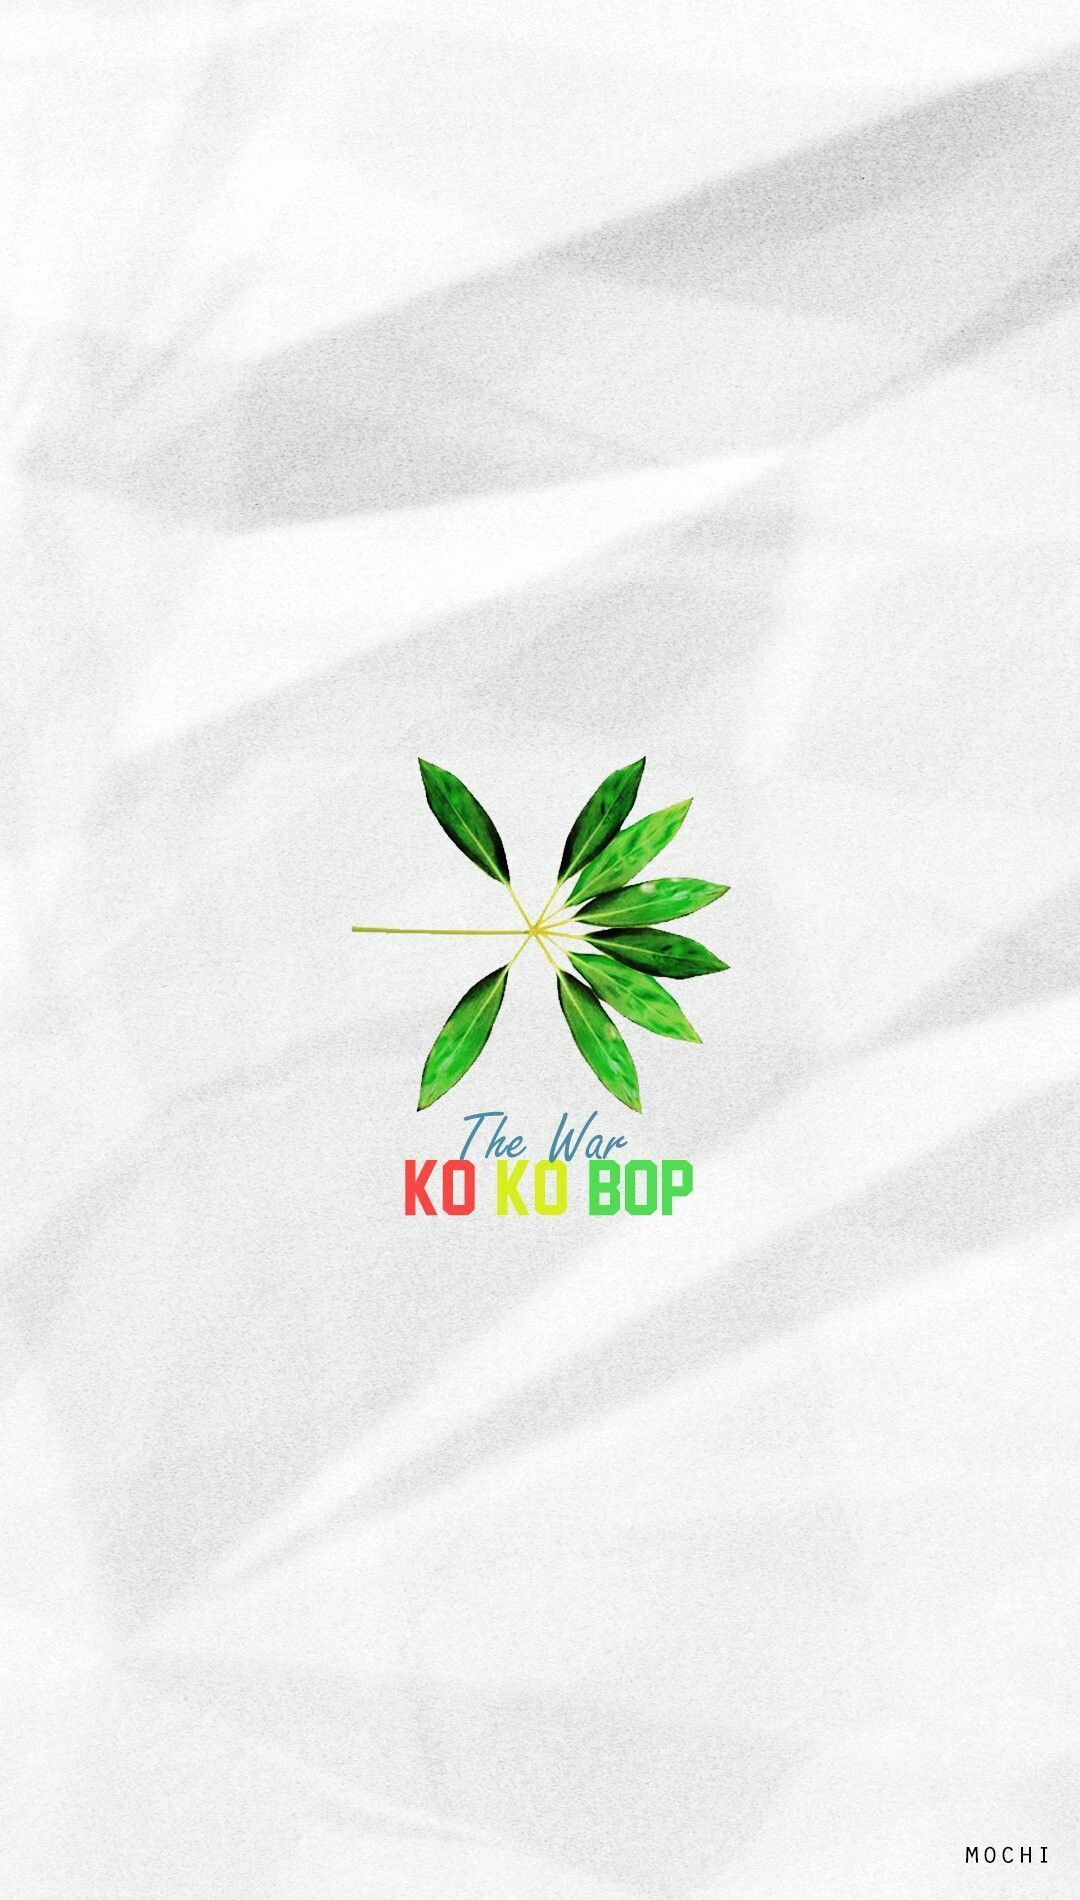 The War Ko Ko Bop Wallpaper. Exo kokobop, Exo logo, Exo for life